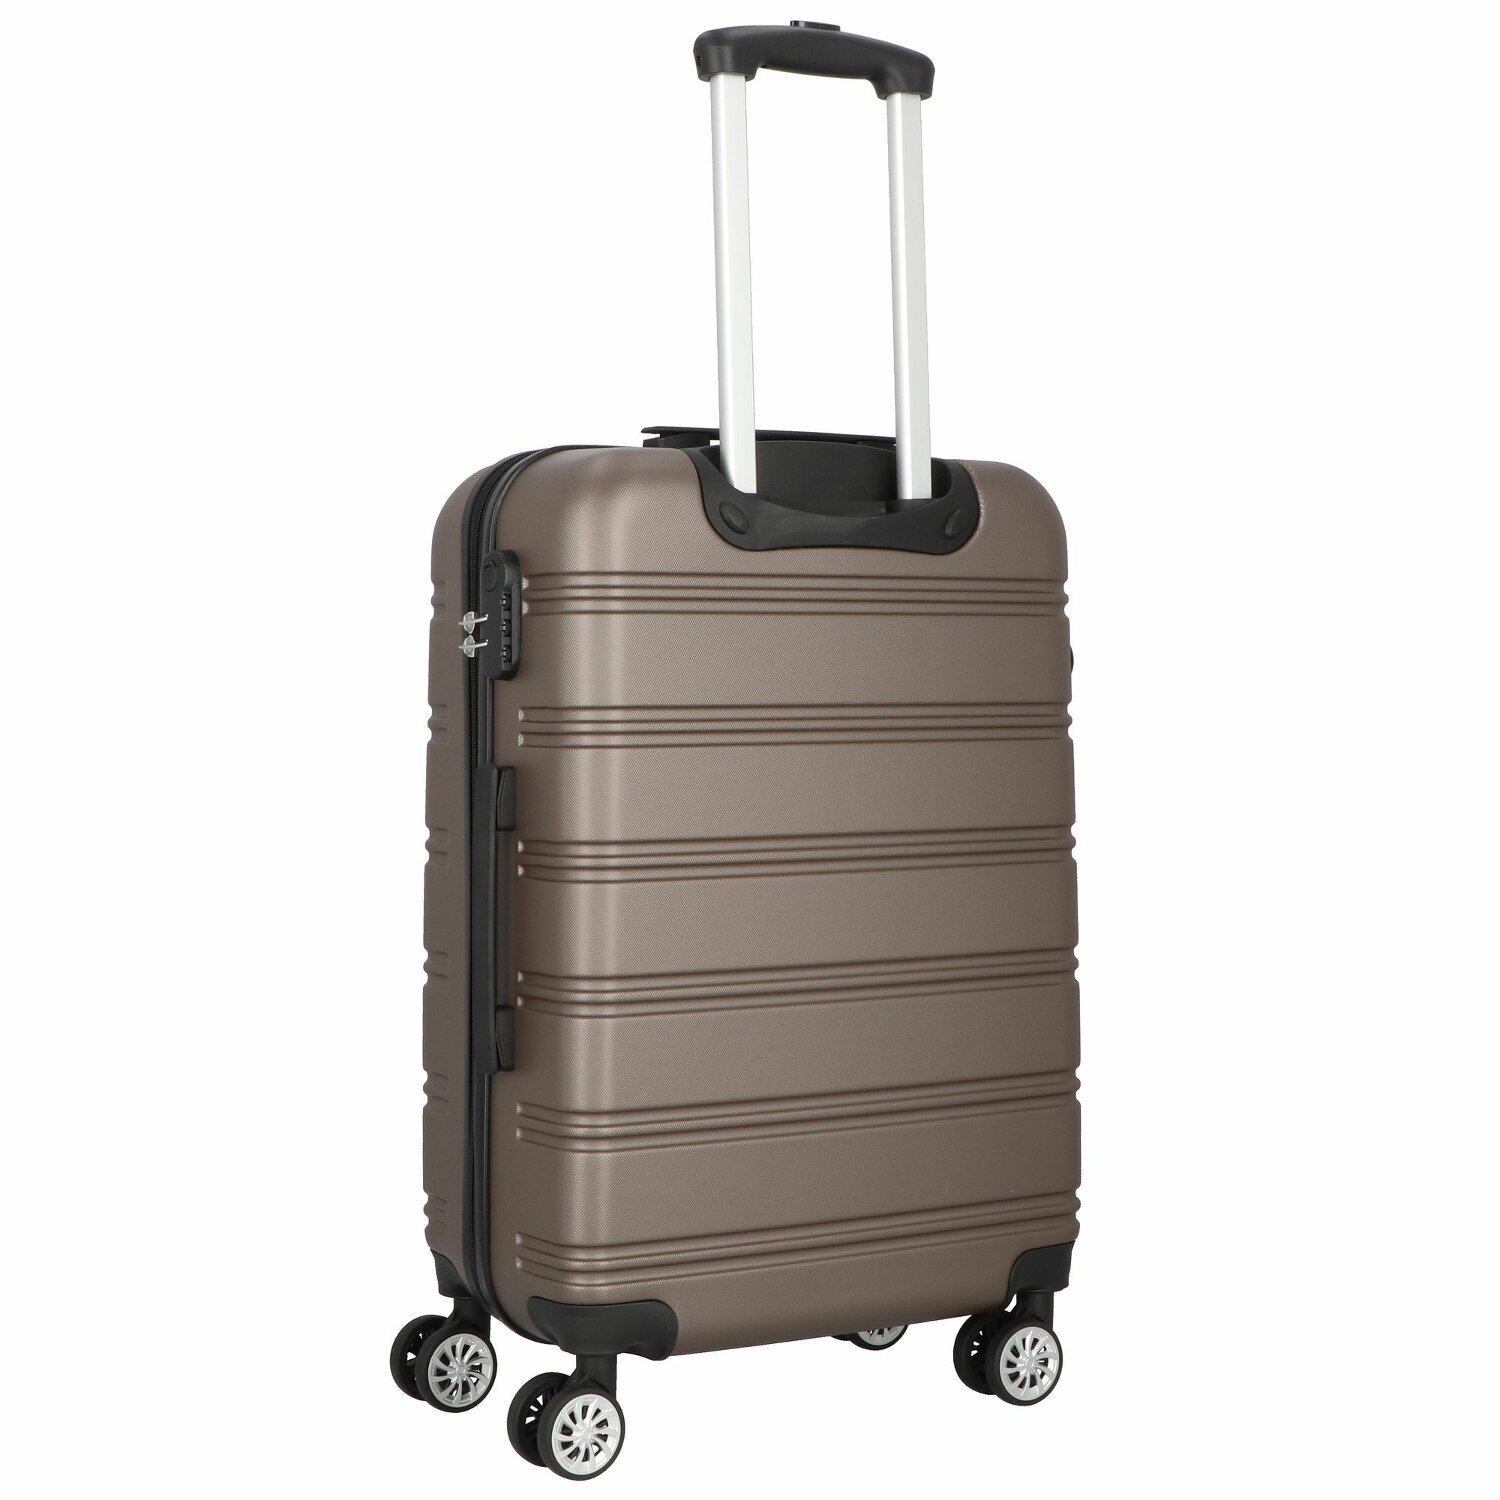 ENVIO GRATIS - Oferta especial pack 3 maletas ABS con 4 ruedas